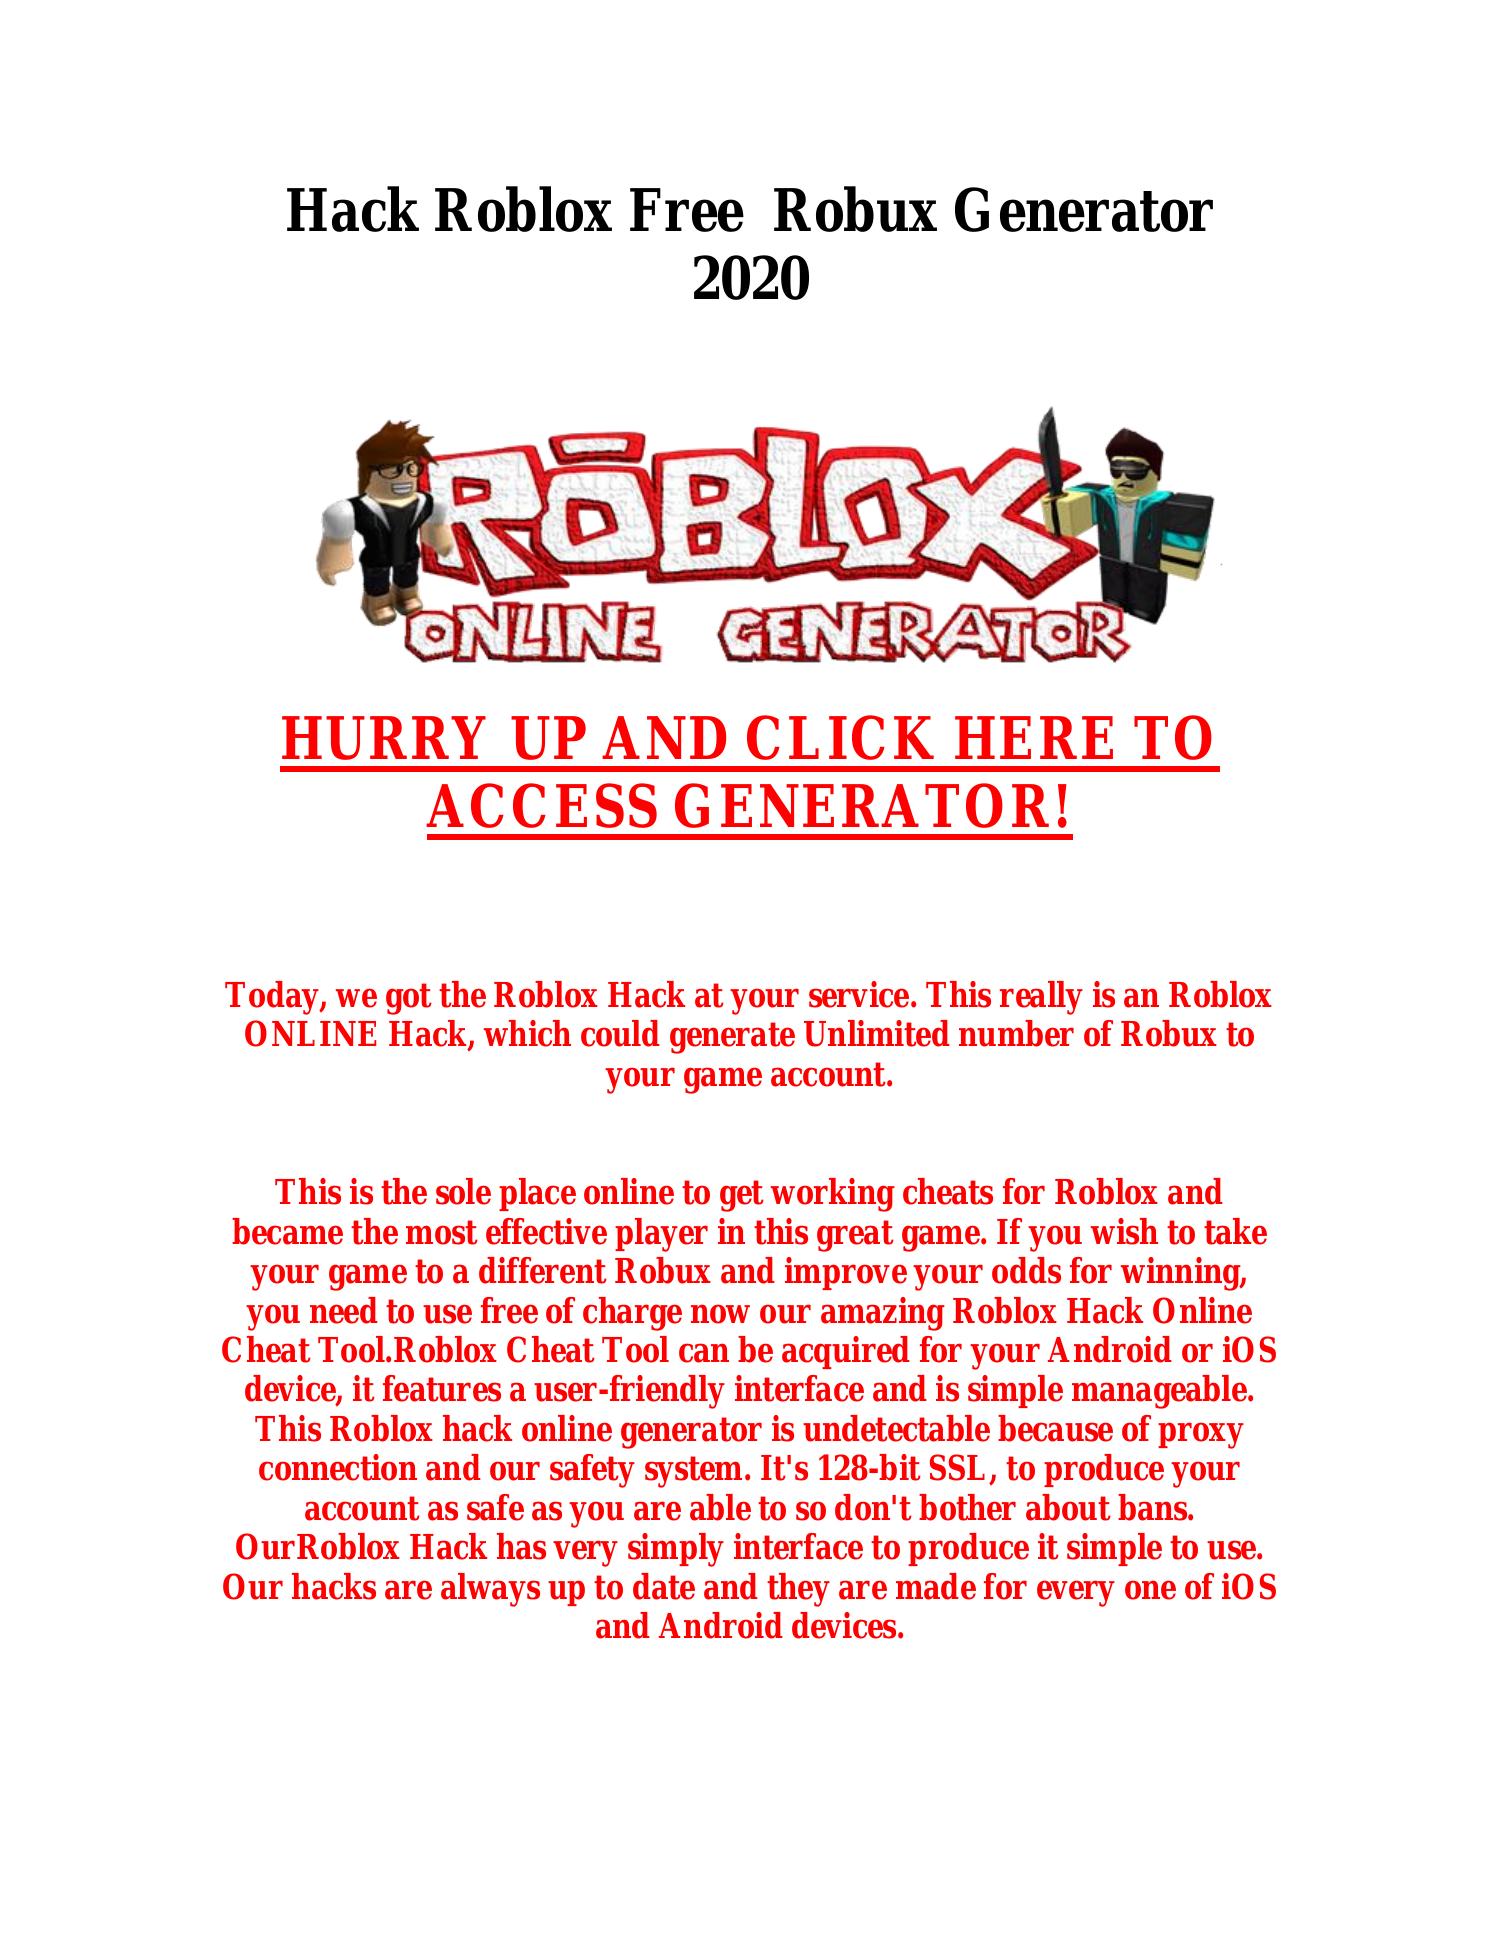 Hack Roblox Free Robux Generator 2020 Converted Pdf Docdroid - robux.club roblox online hack